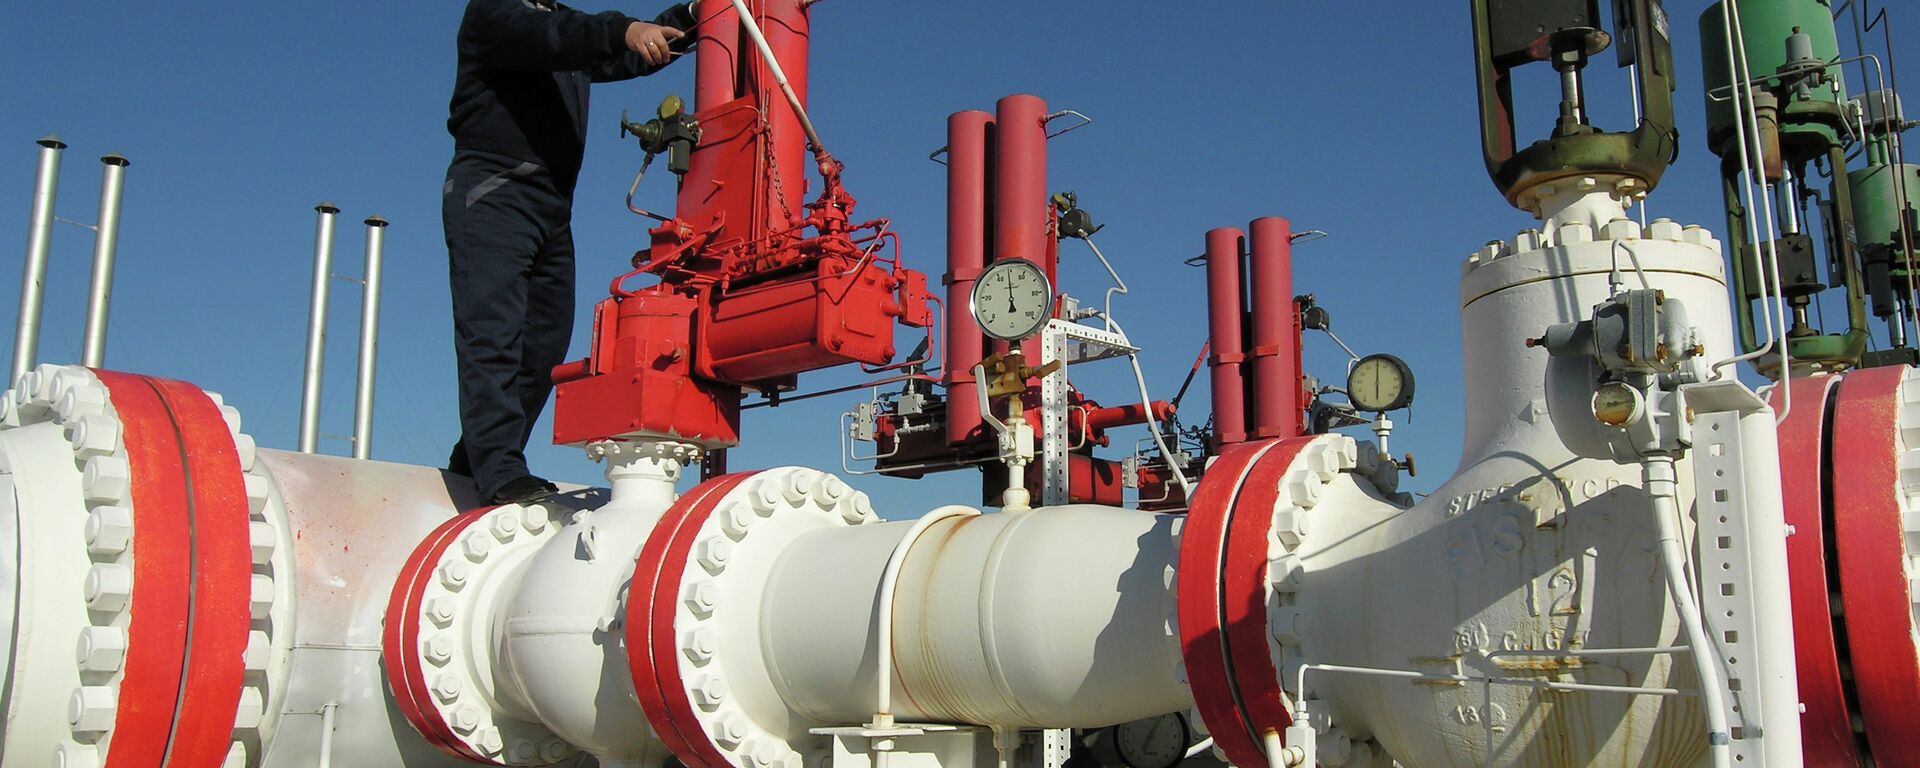 Gas pipeline worker checks the valves at the Yapracik installations of Turkey's state-run BOTAS gas company on the outskirts of Ankara - Sputnik International, 1920, 07.10.2021